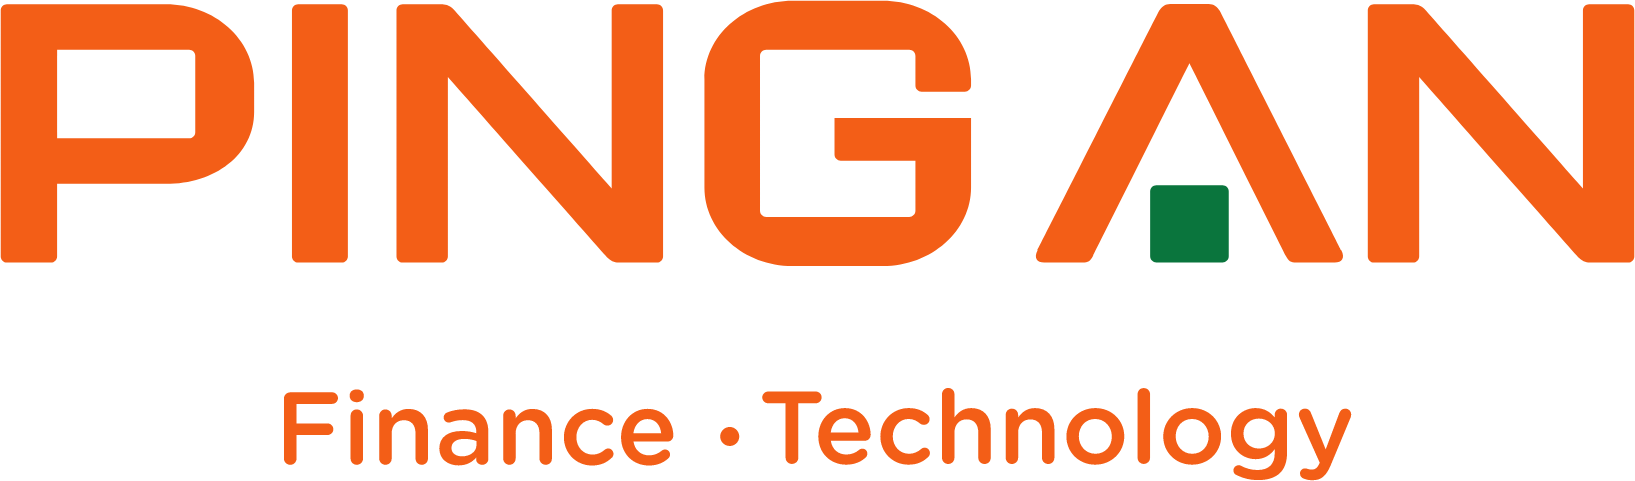 Ping An Insurance logo large (transparent PNG)